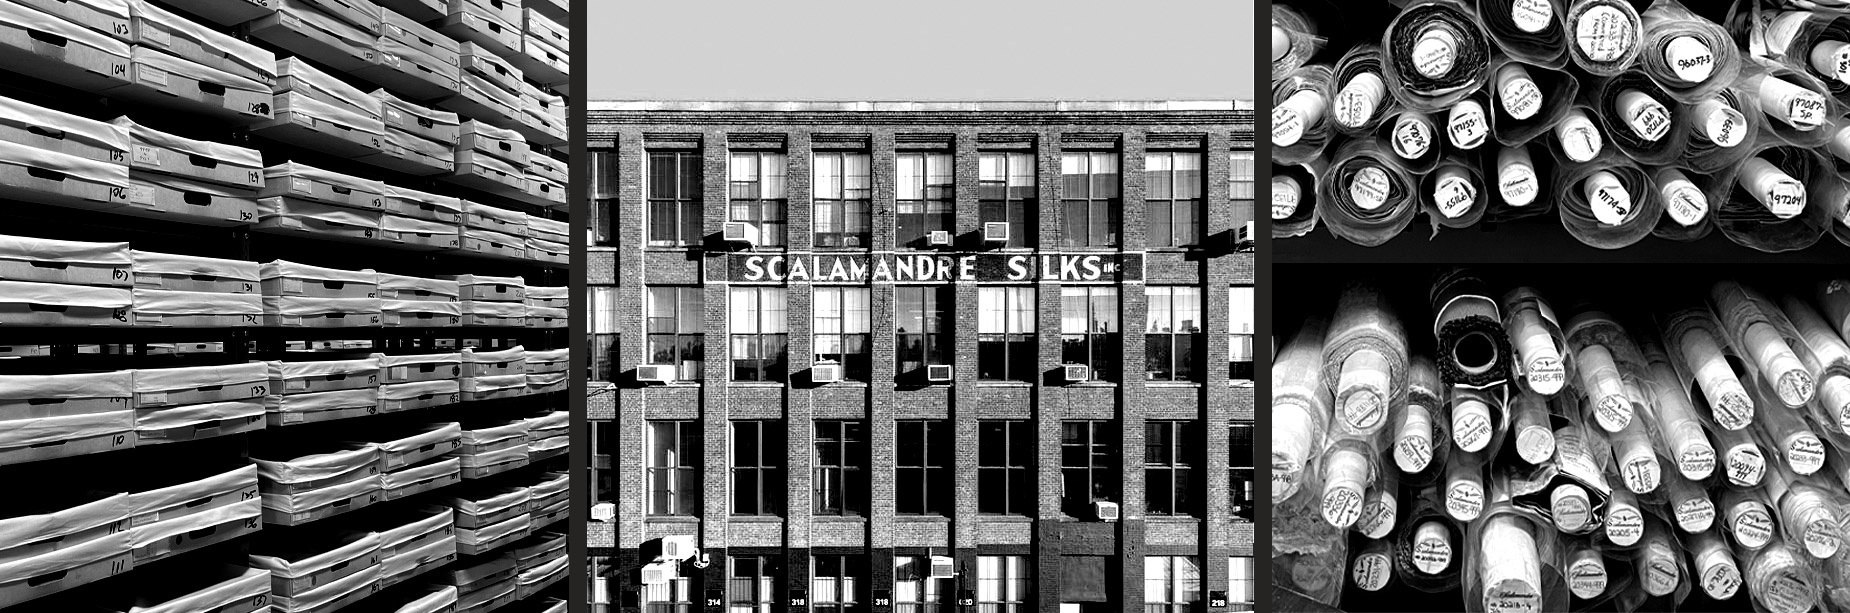 Scalamandre Archives